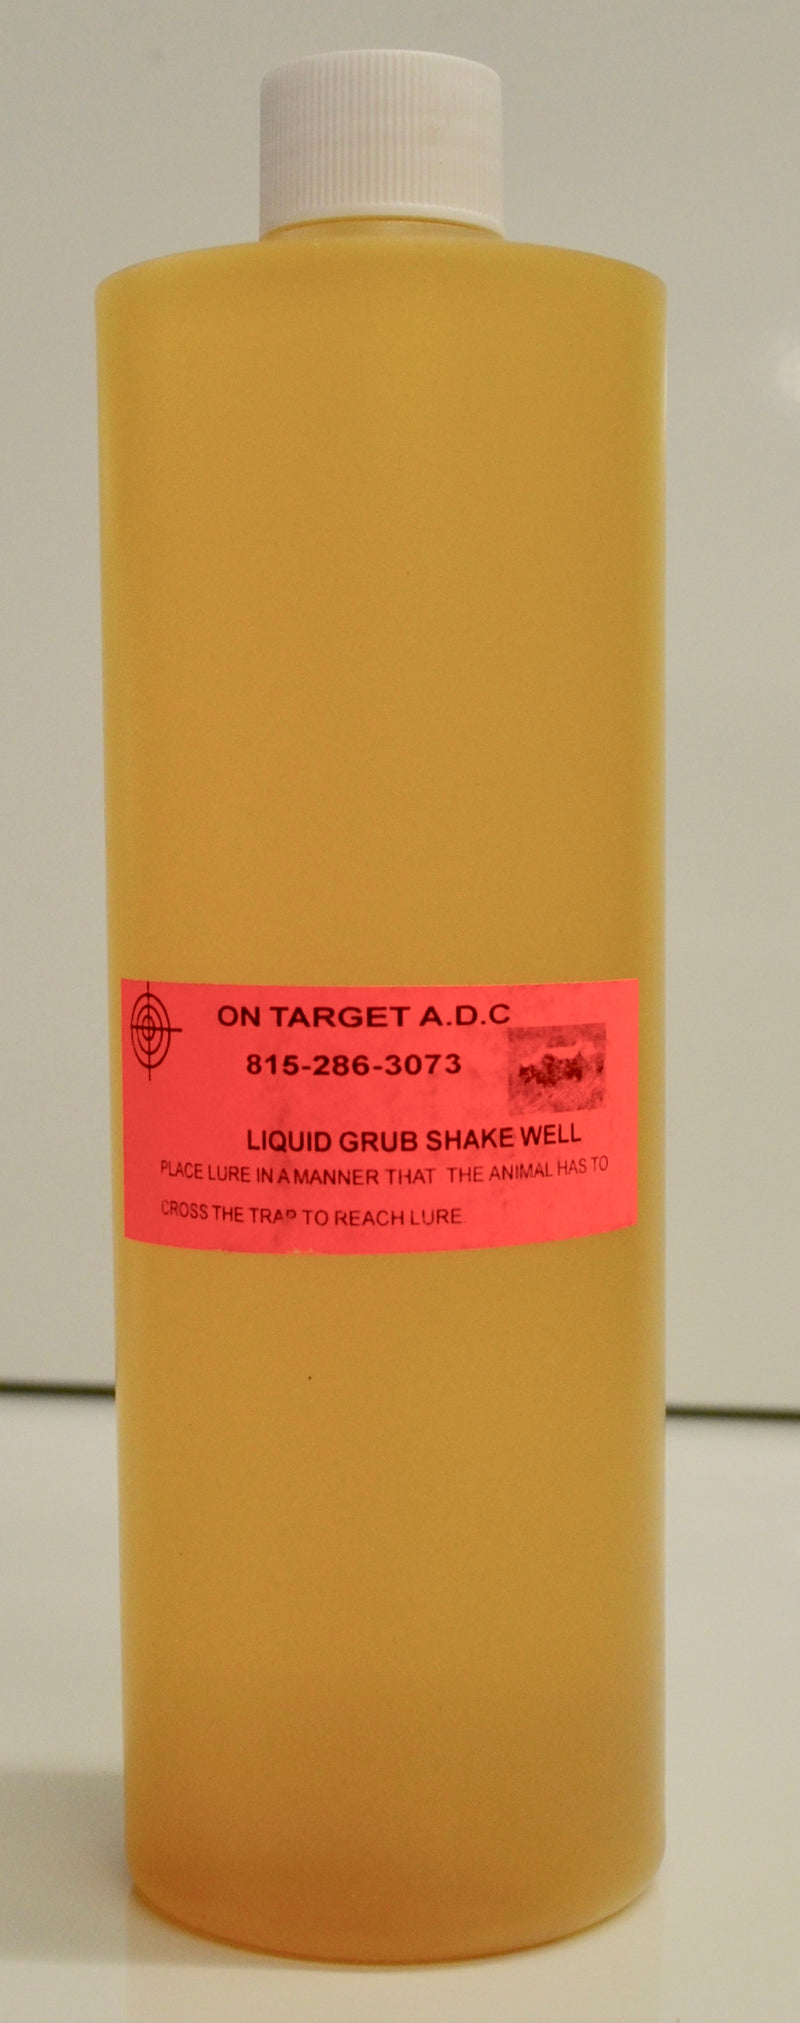 Liquid Grub by On Target